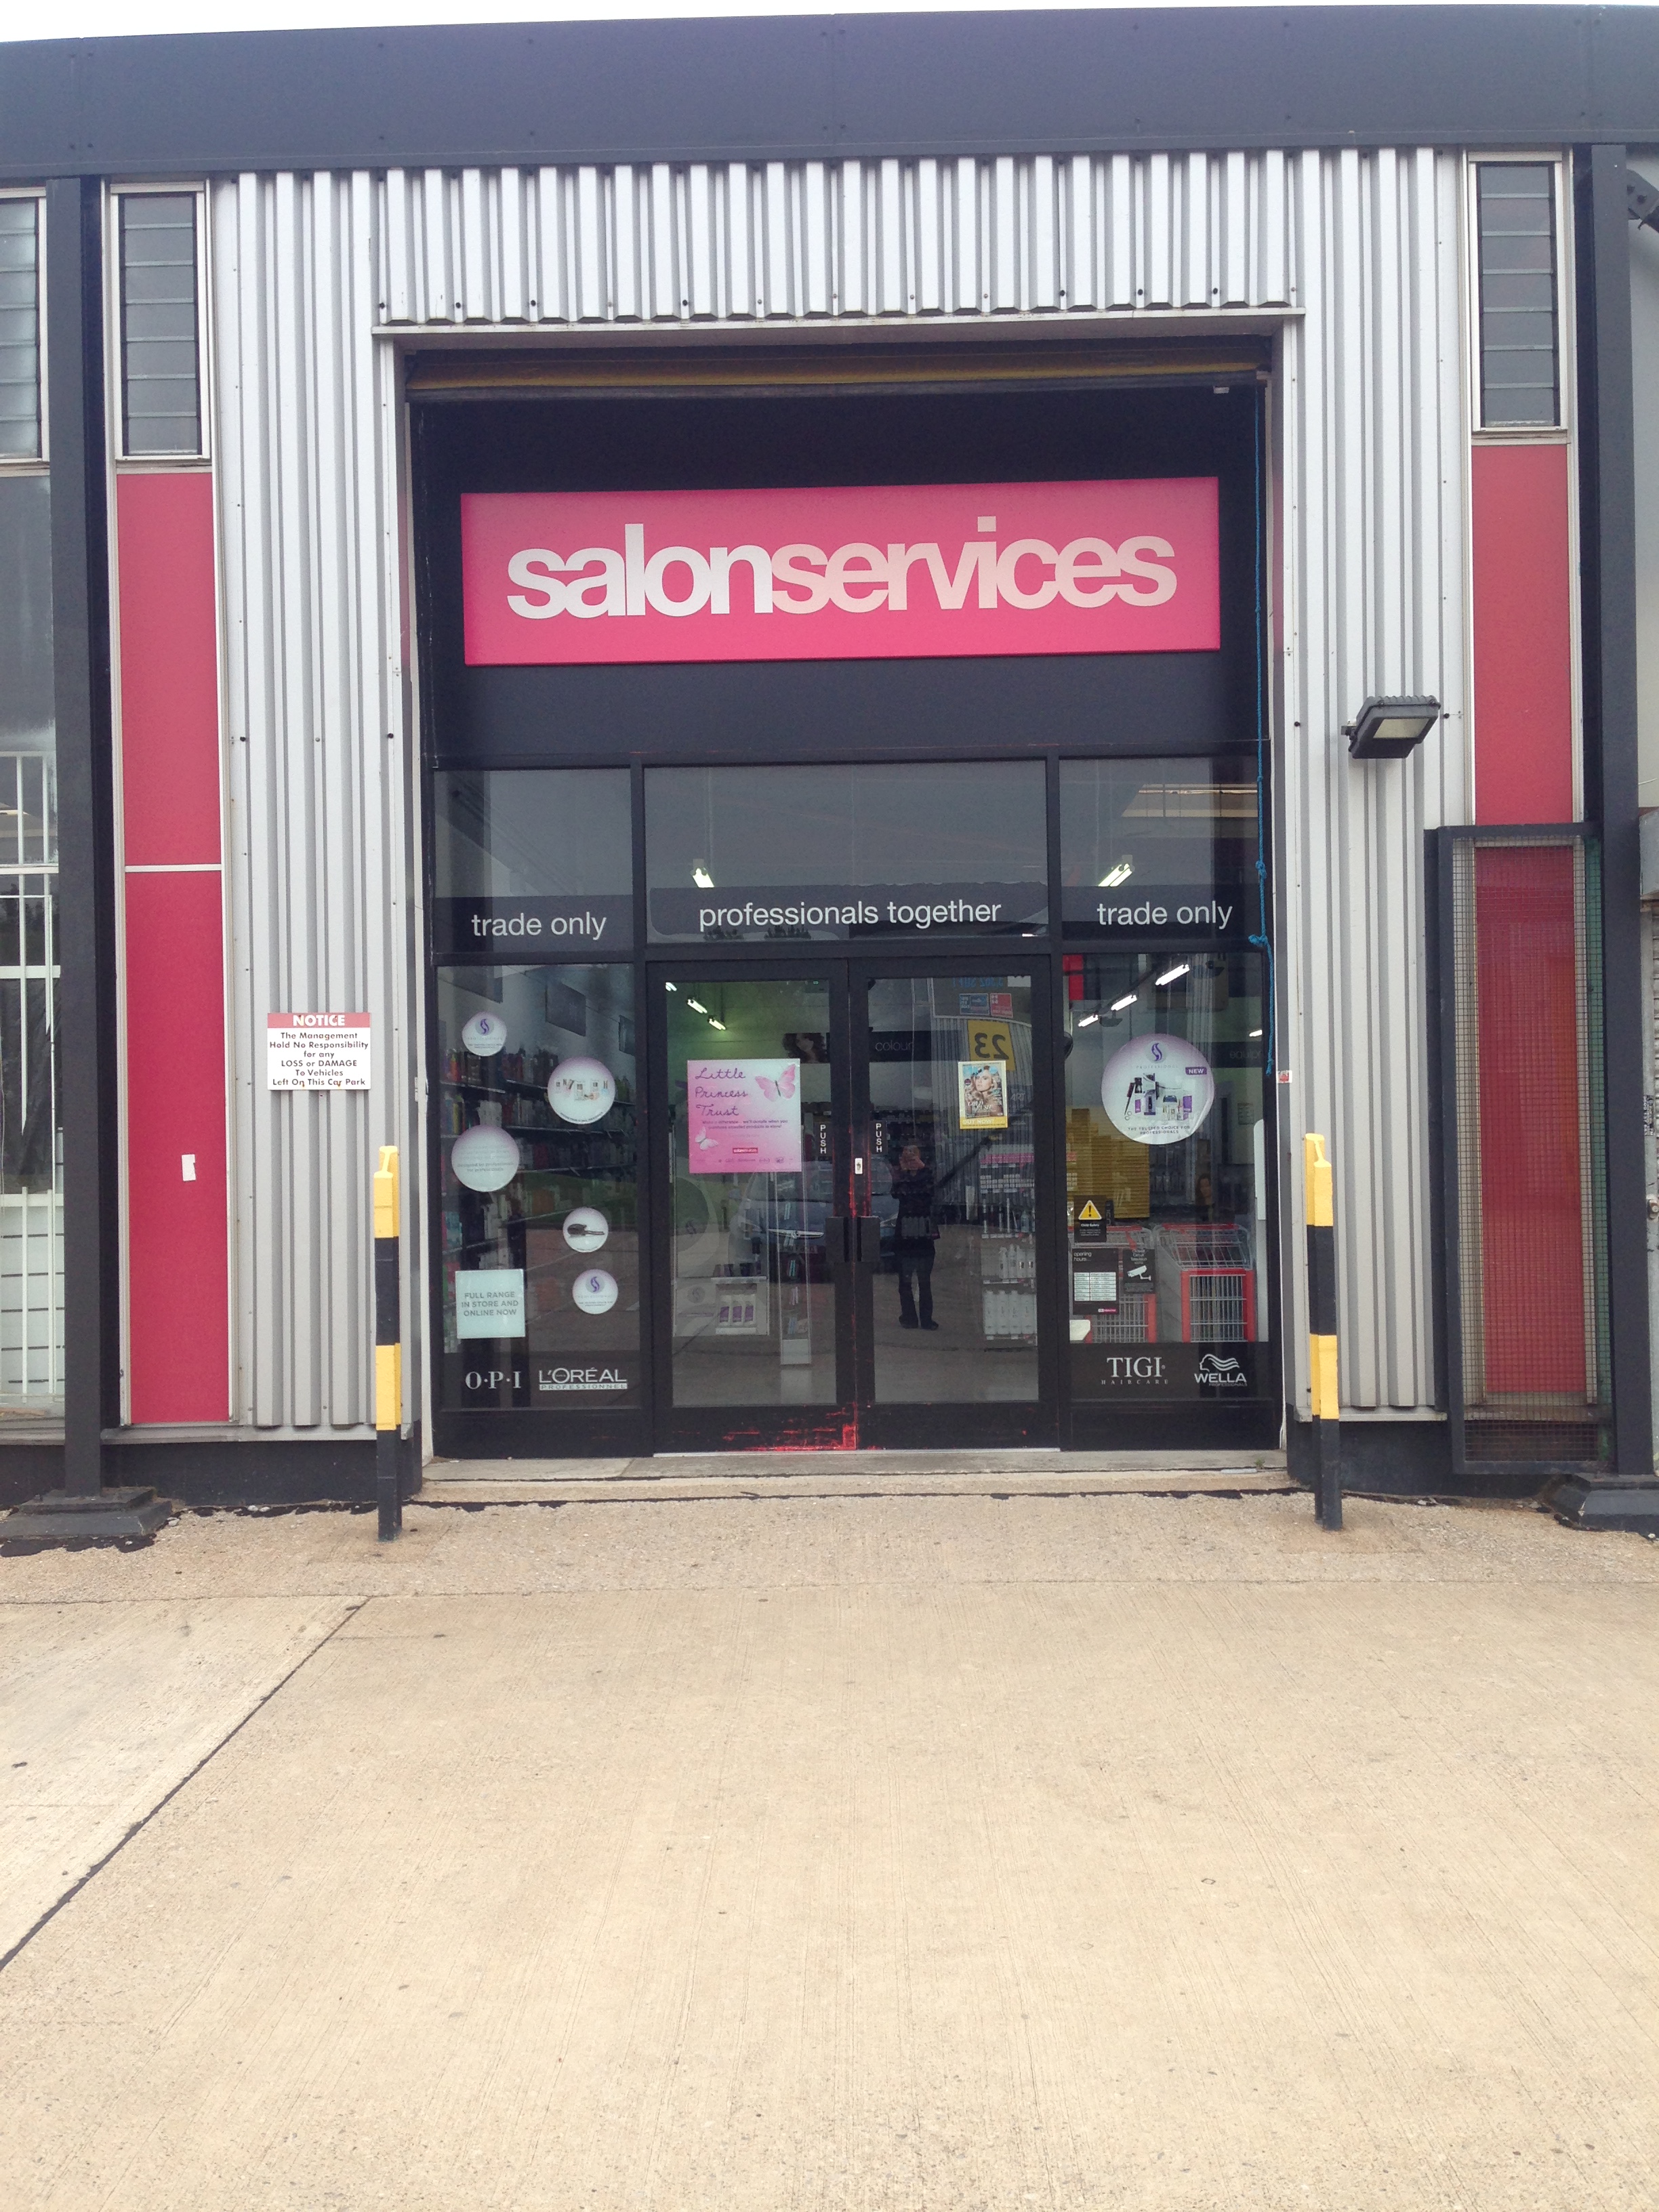 Salon Services Warrington 01925 415173